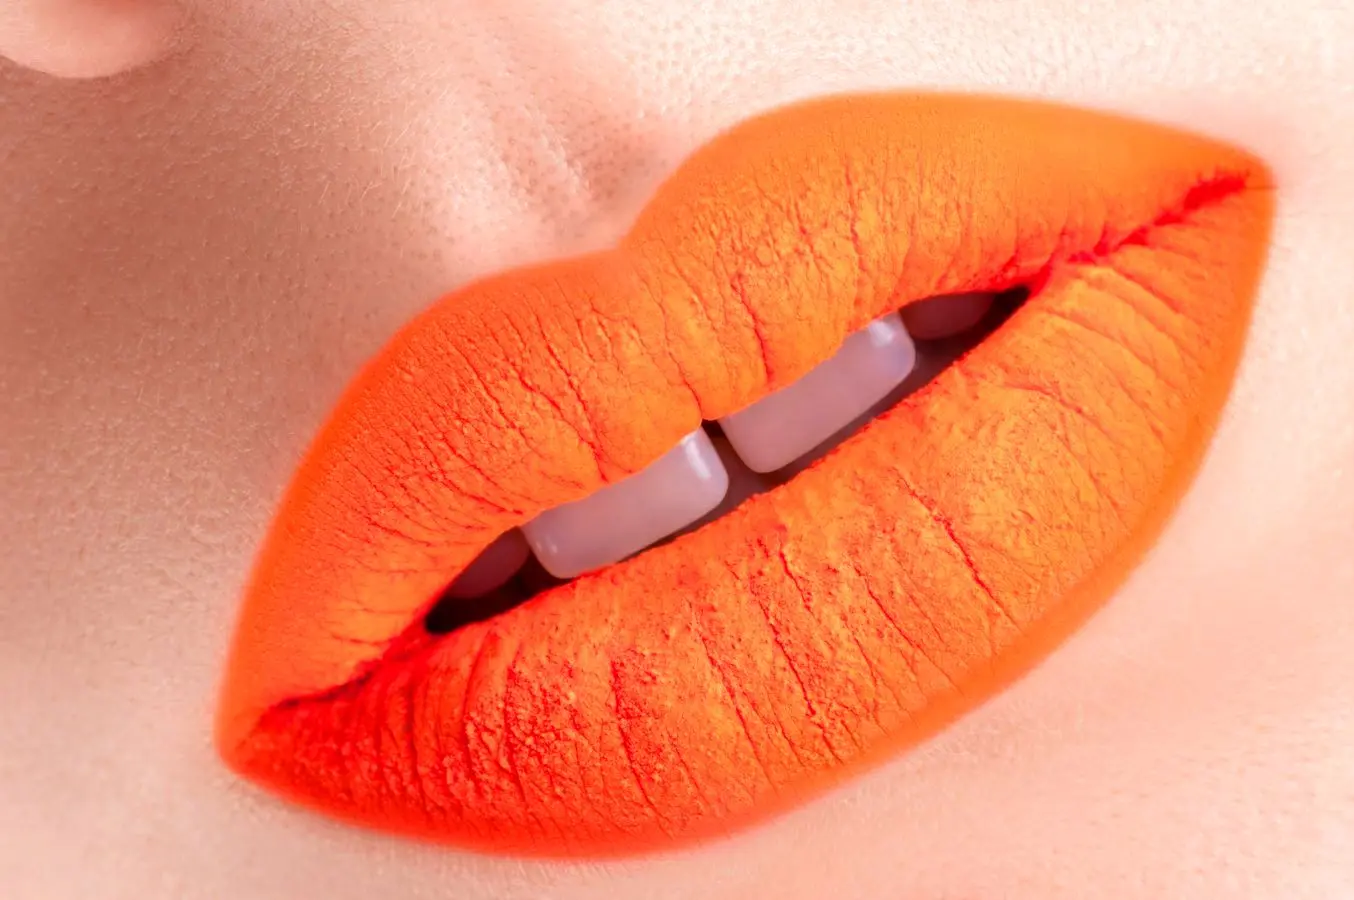 The hottest makeup trend for summer? Orange lipstick